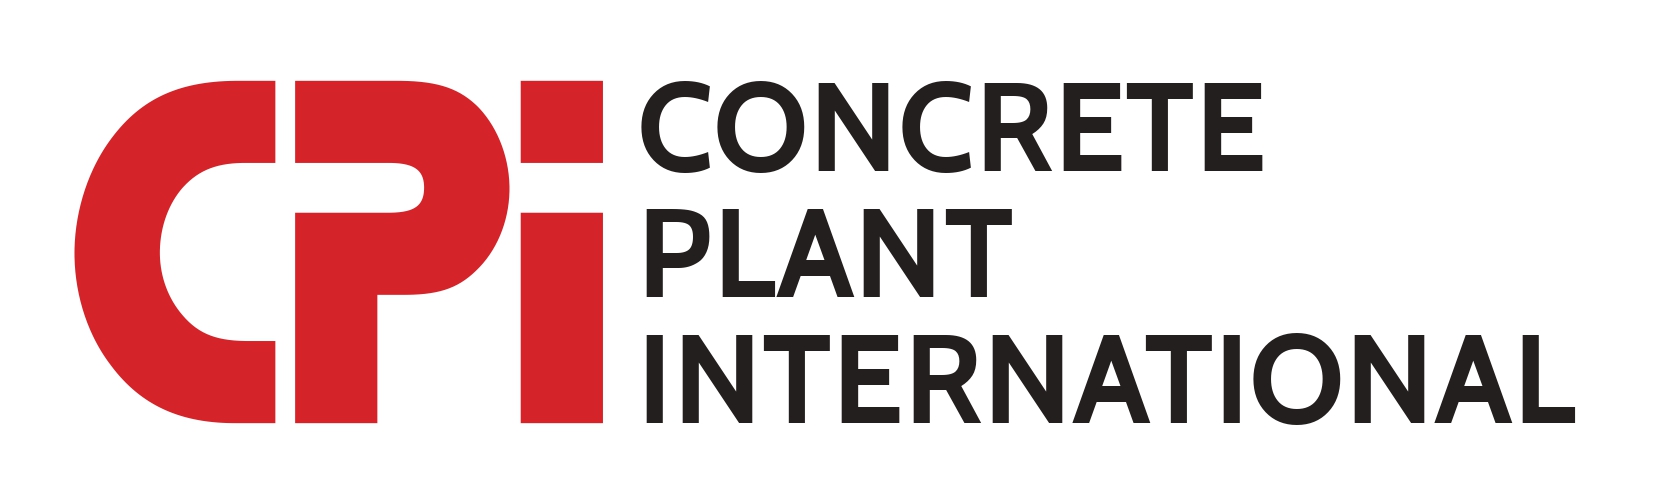 CPi - Concrete Plant International